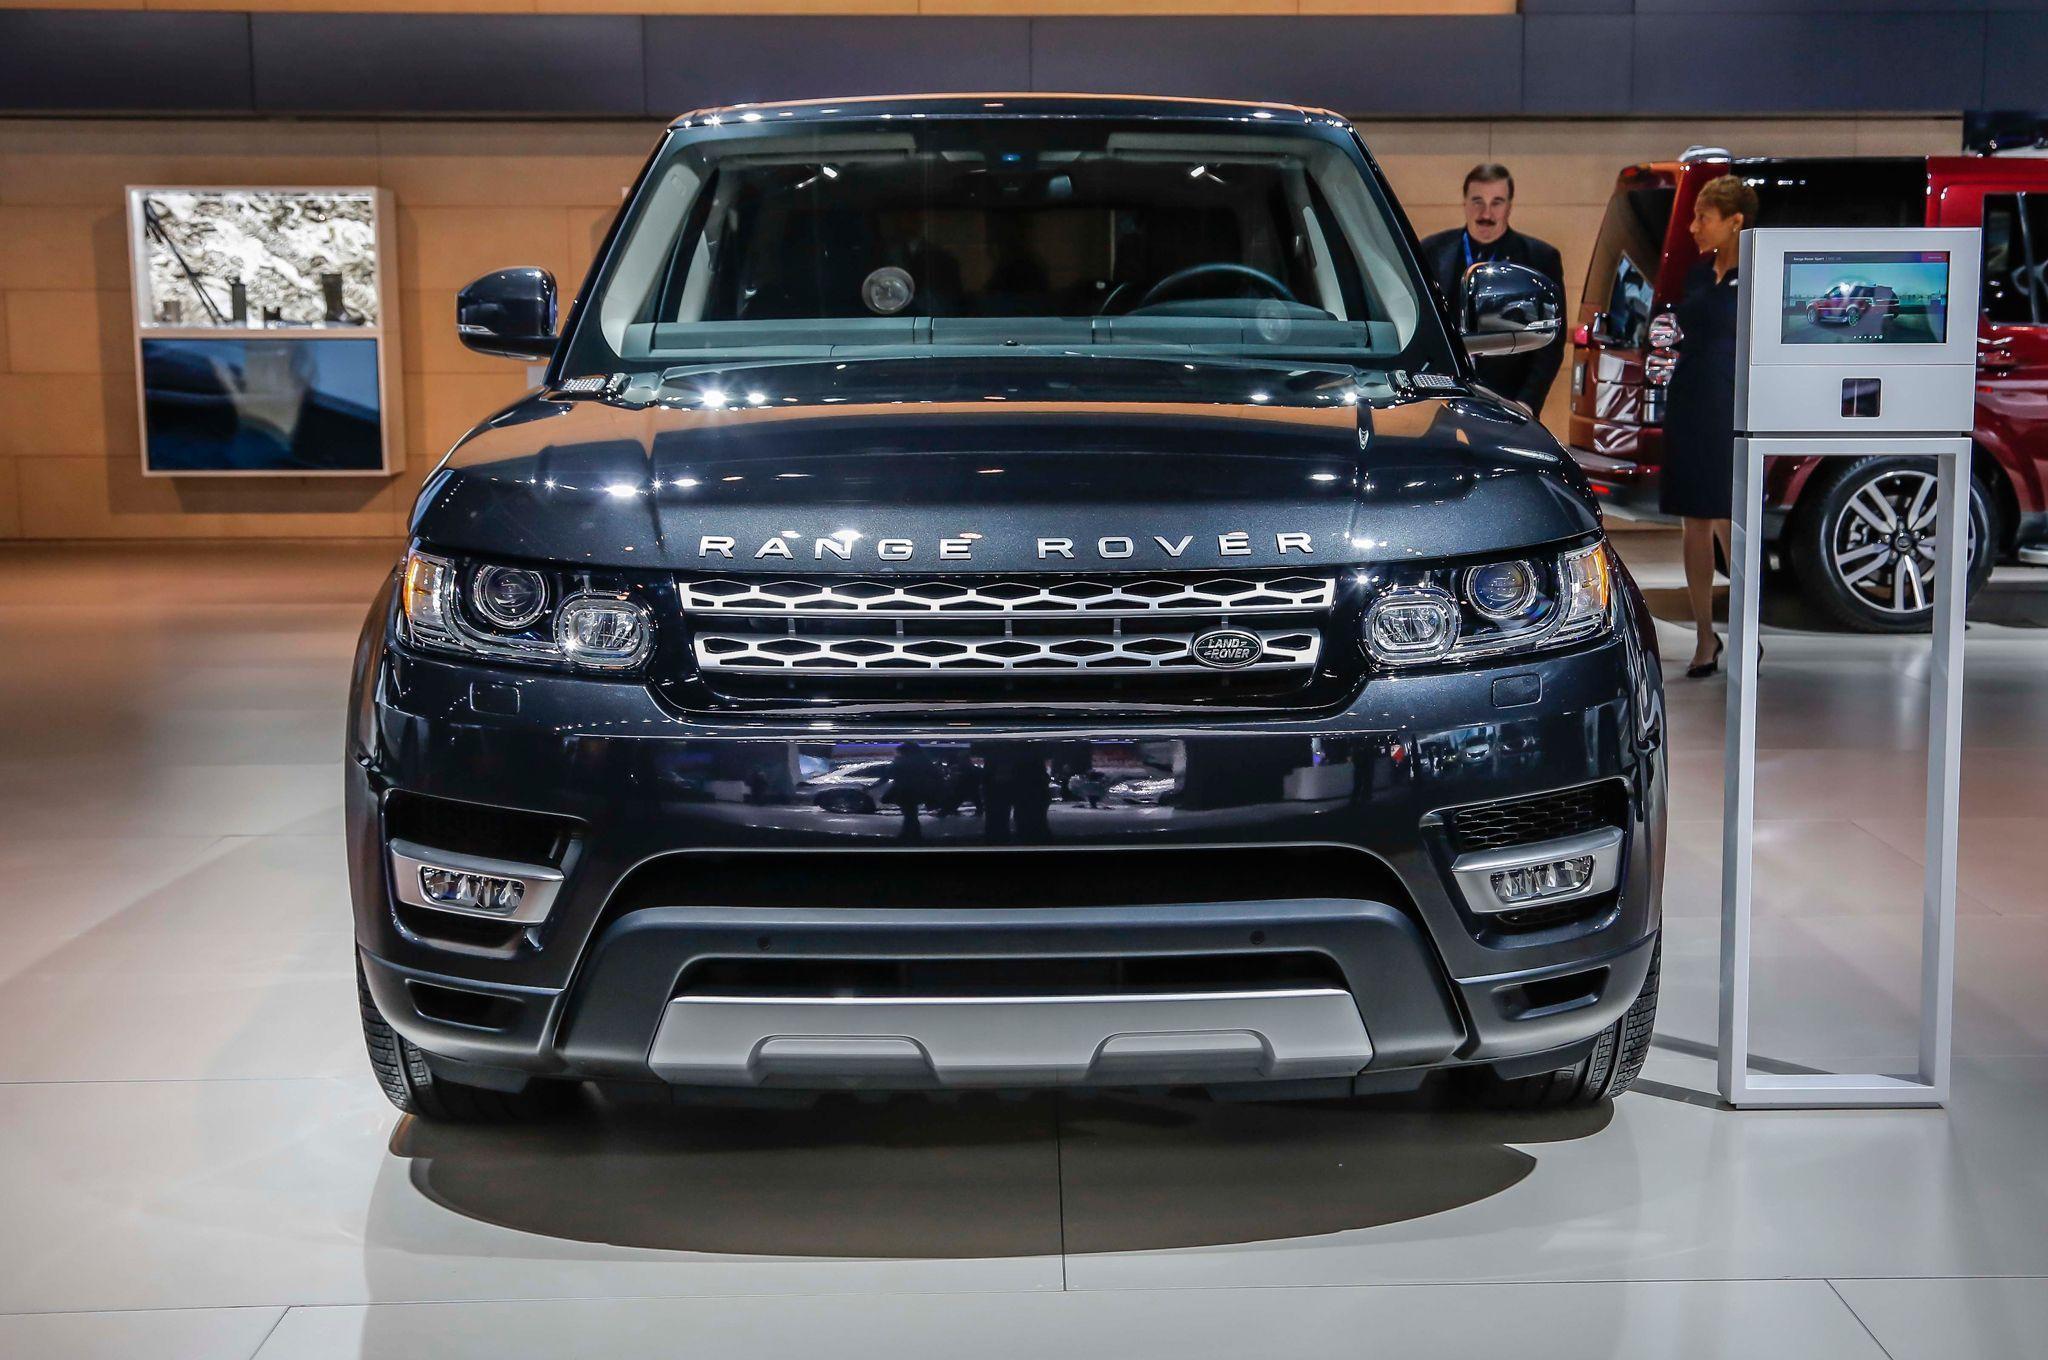 Range Rover, Range Rover Sport Diesel Models to Debut in Detroit